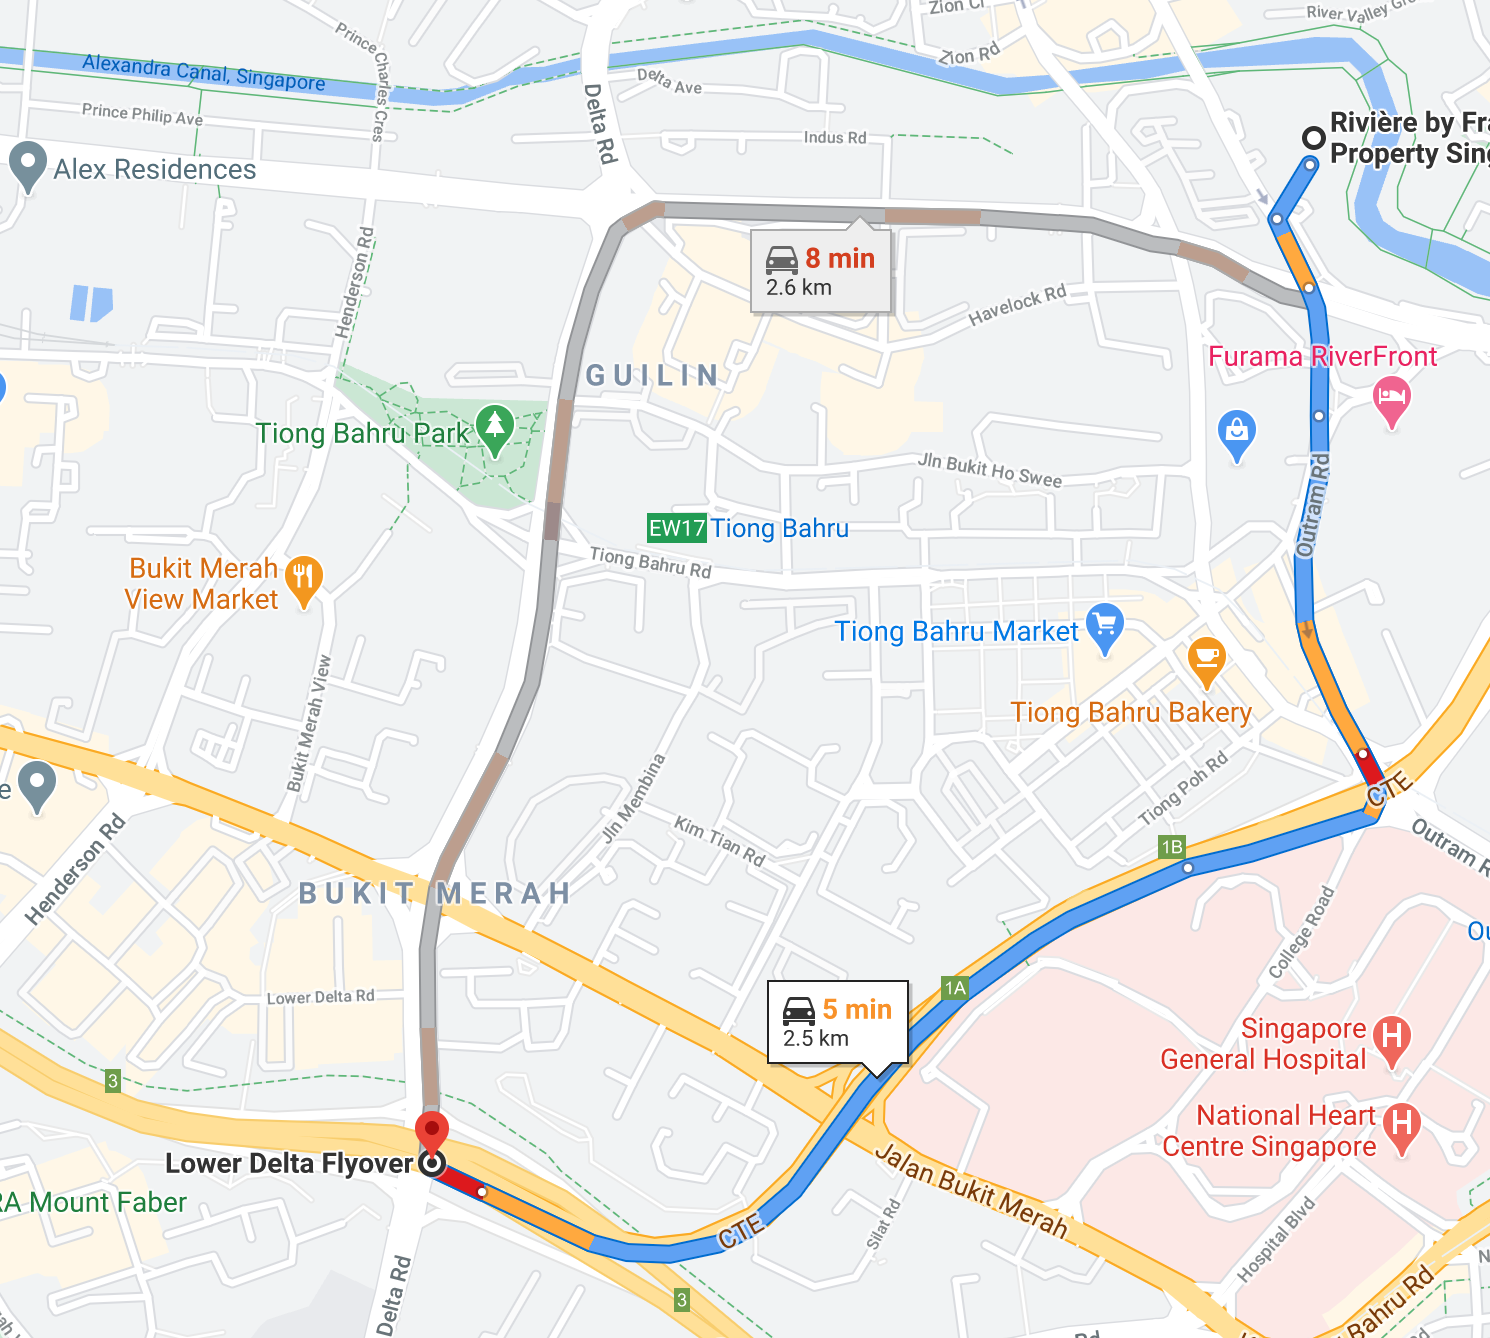 Directions to AYE courtesy Google Maps